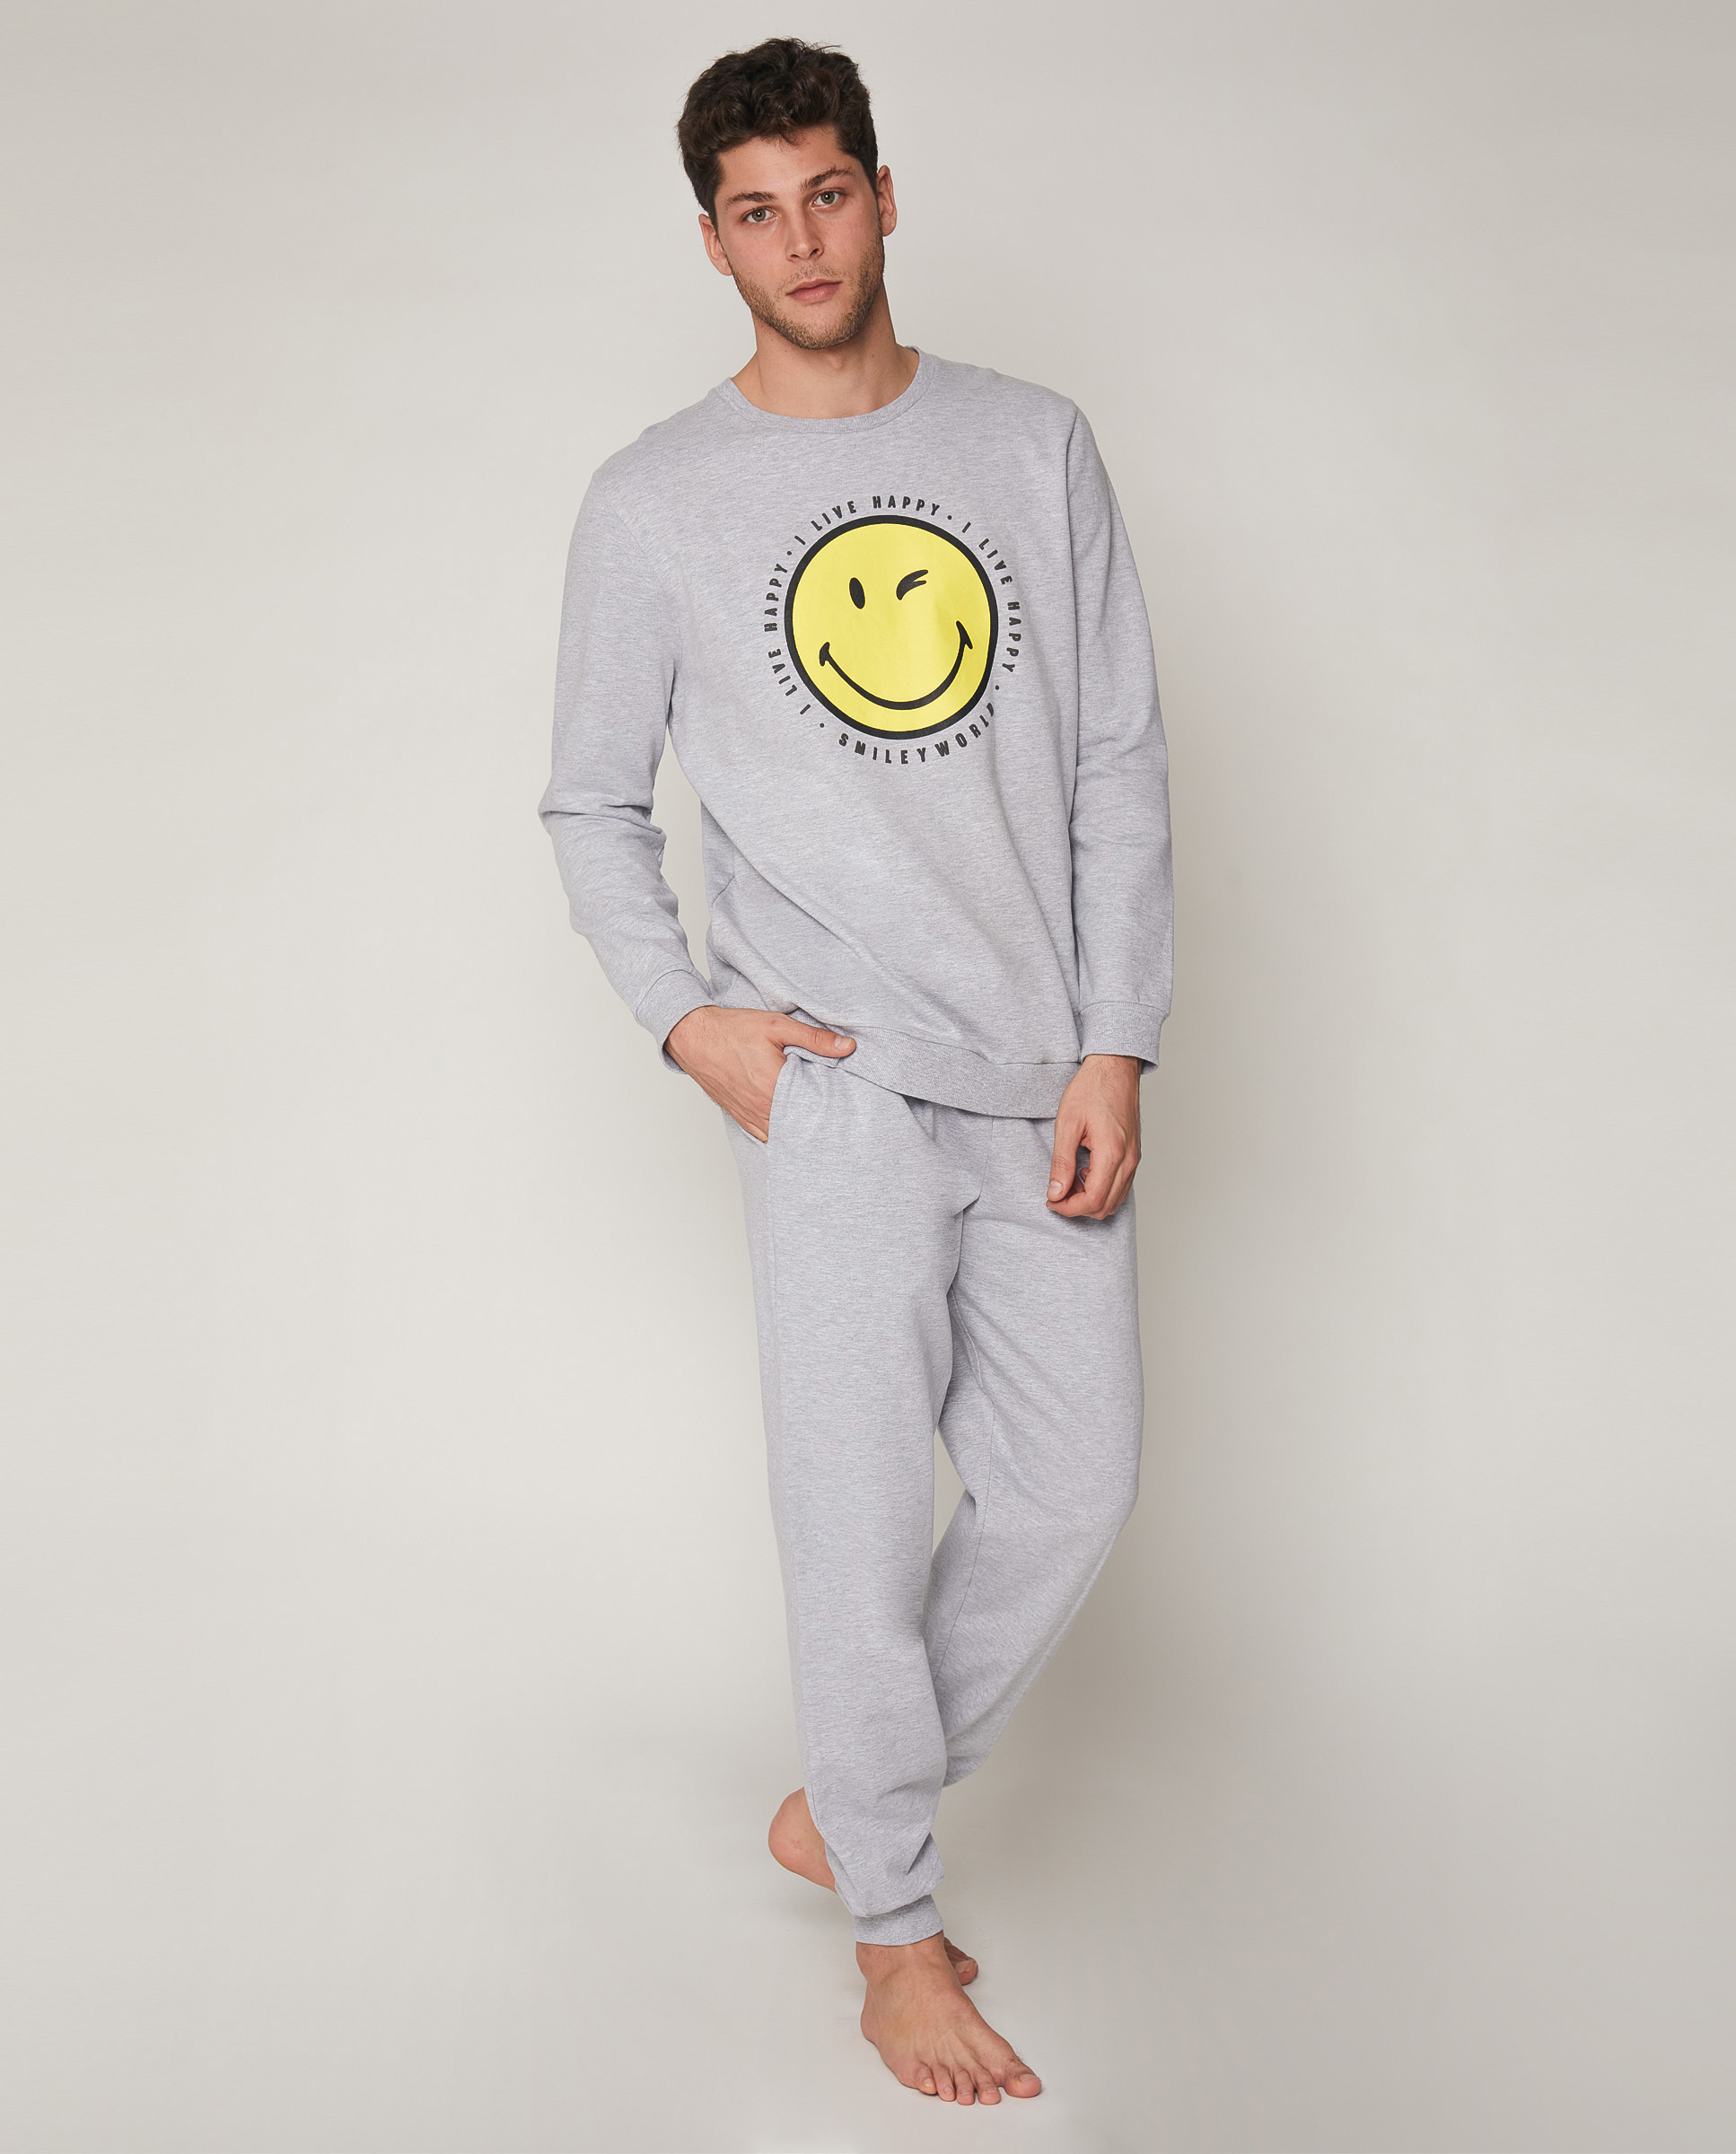   Pijama hom 55677 smiley 